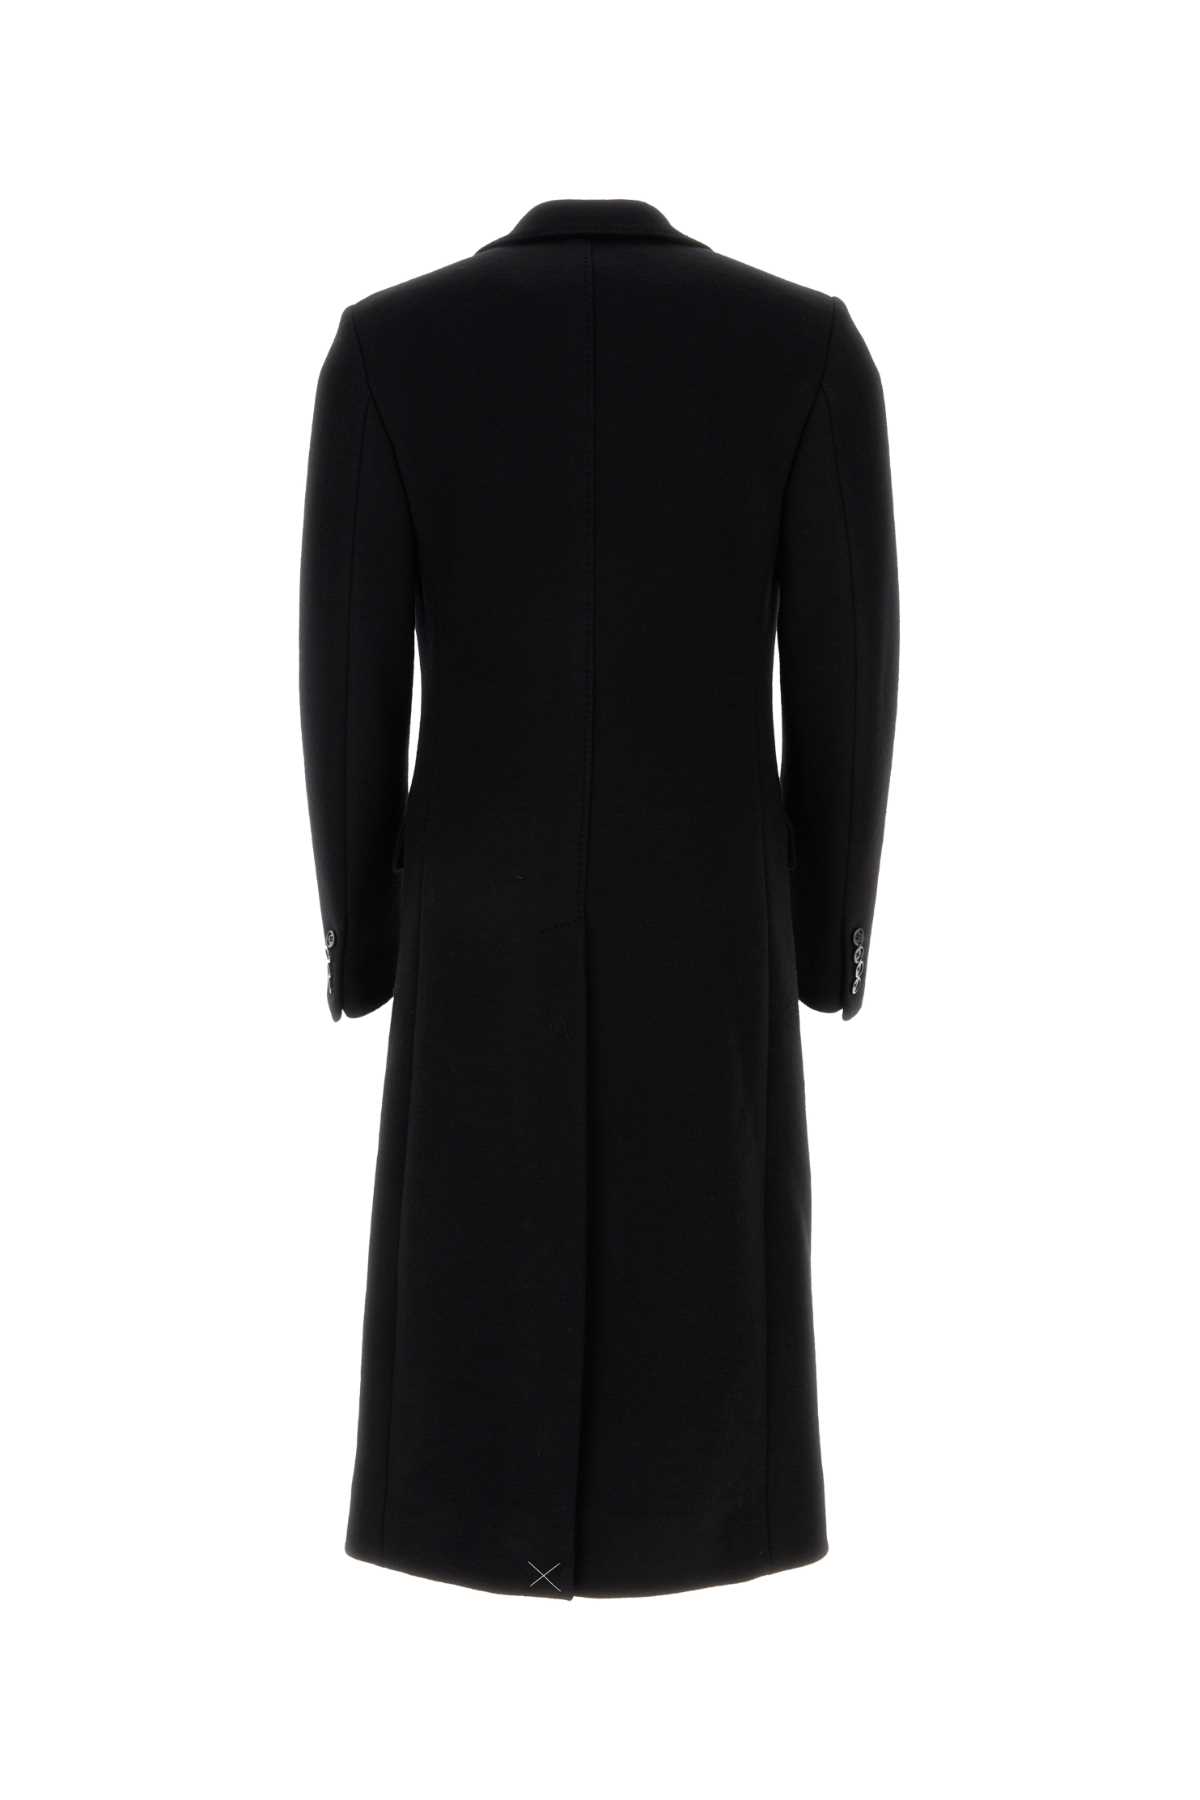 Dolce & Gabbana Black Stretch Wool Blend Coat In N0000